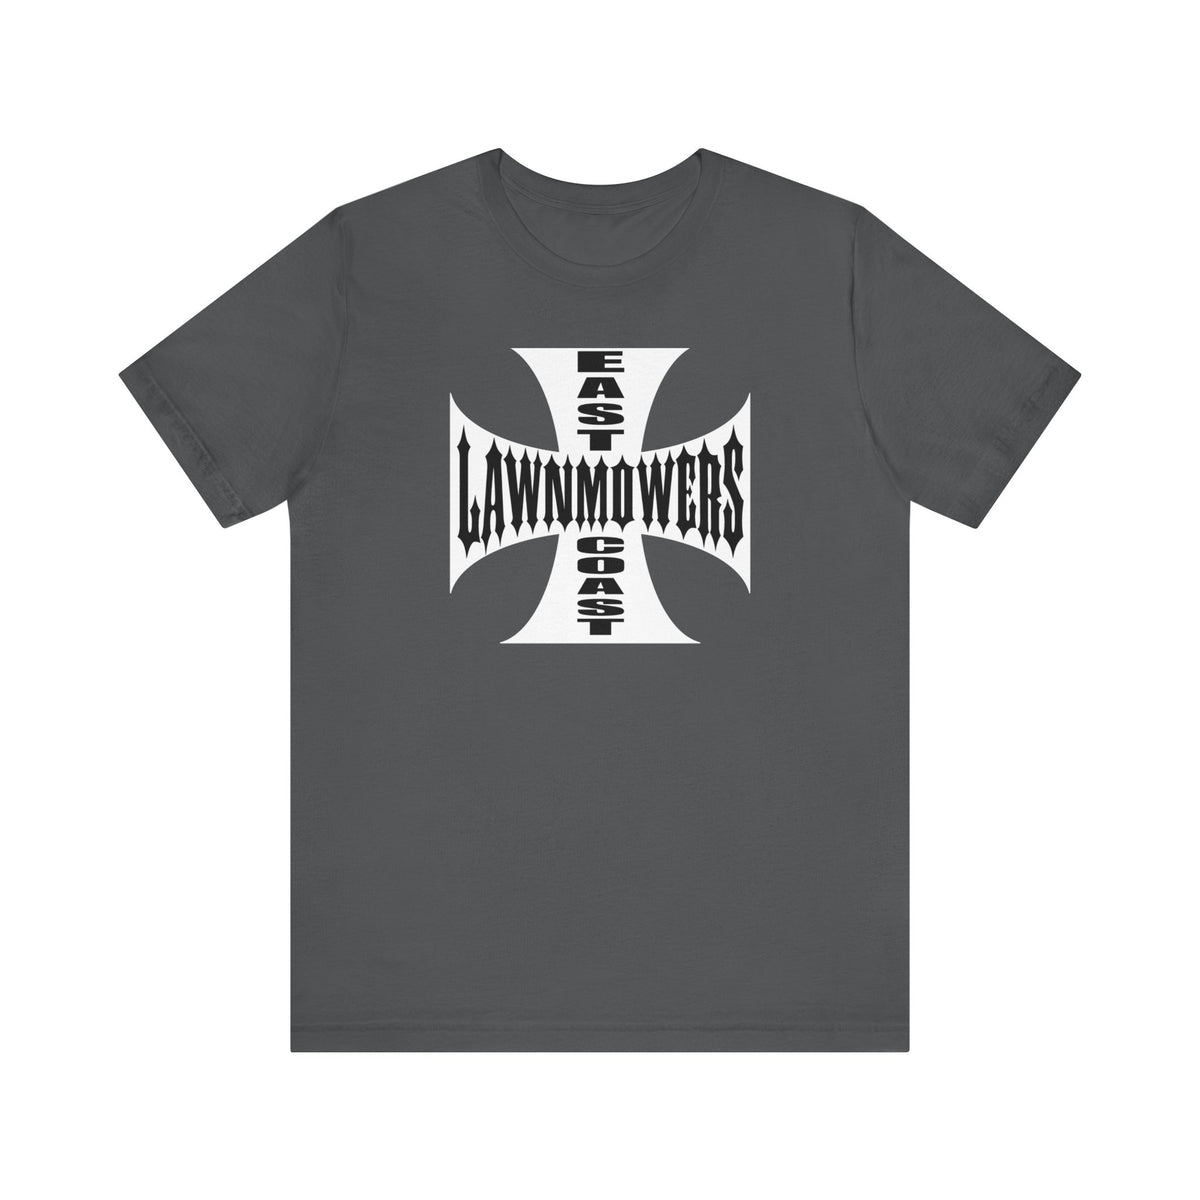 East Coast Lawnmowers - Men's T-Shirt